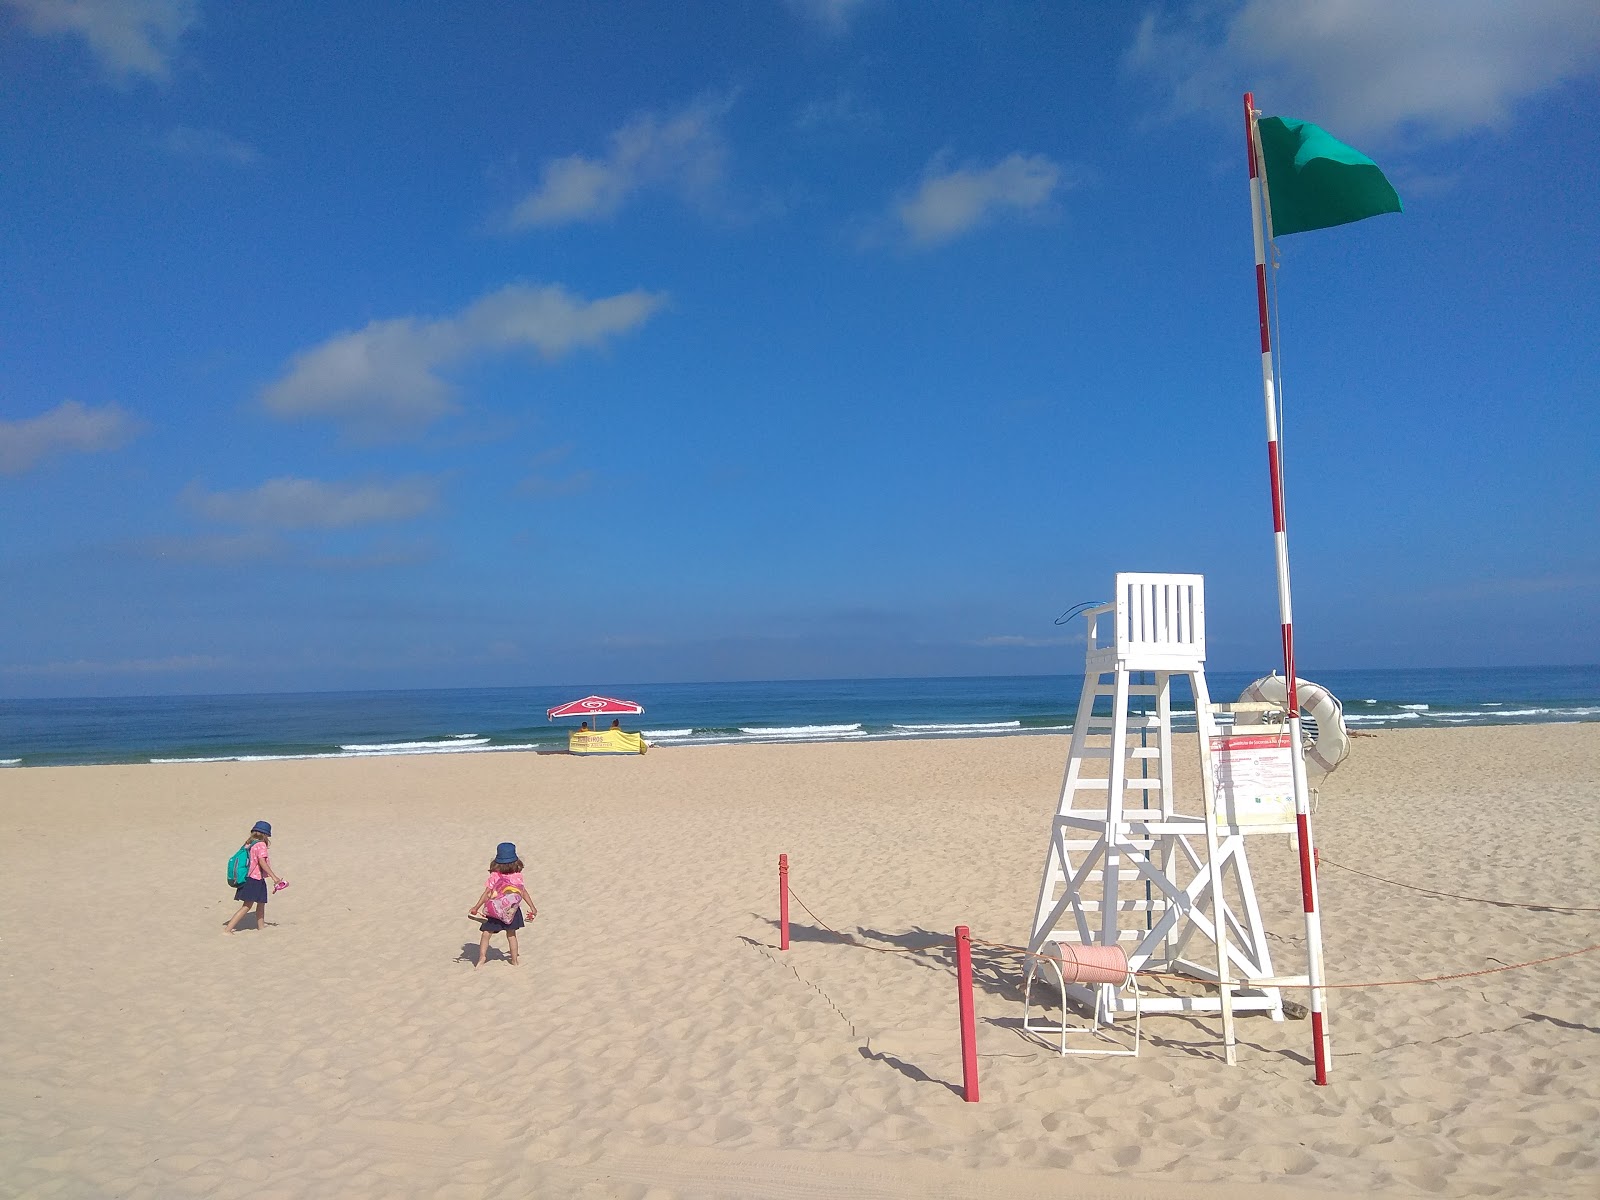 Photo of Praia de Mira - popular place among relax connoisseurs